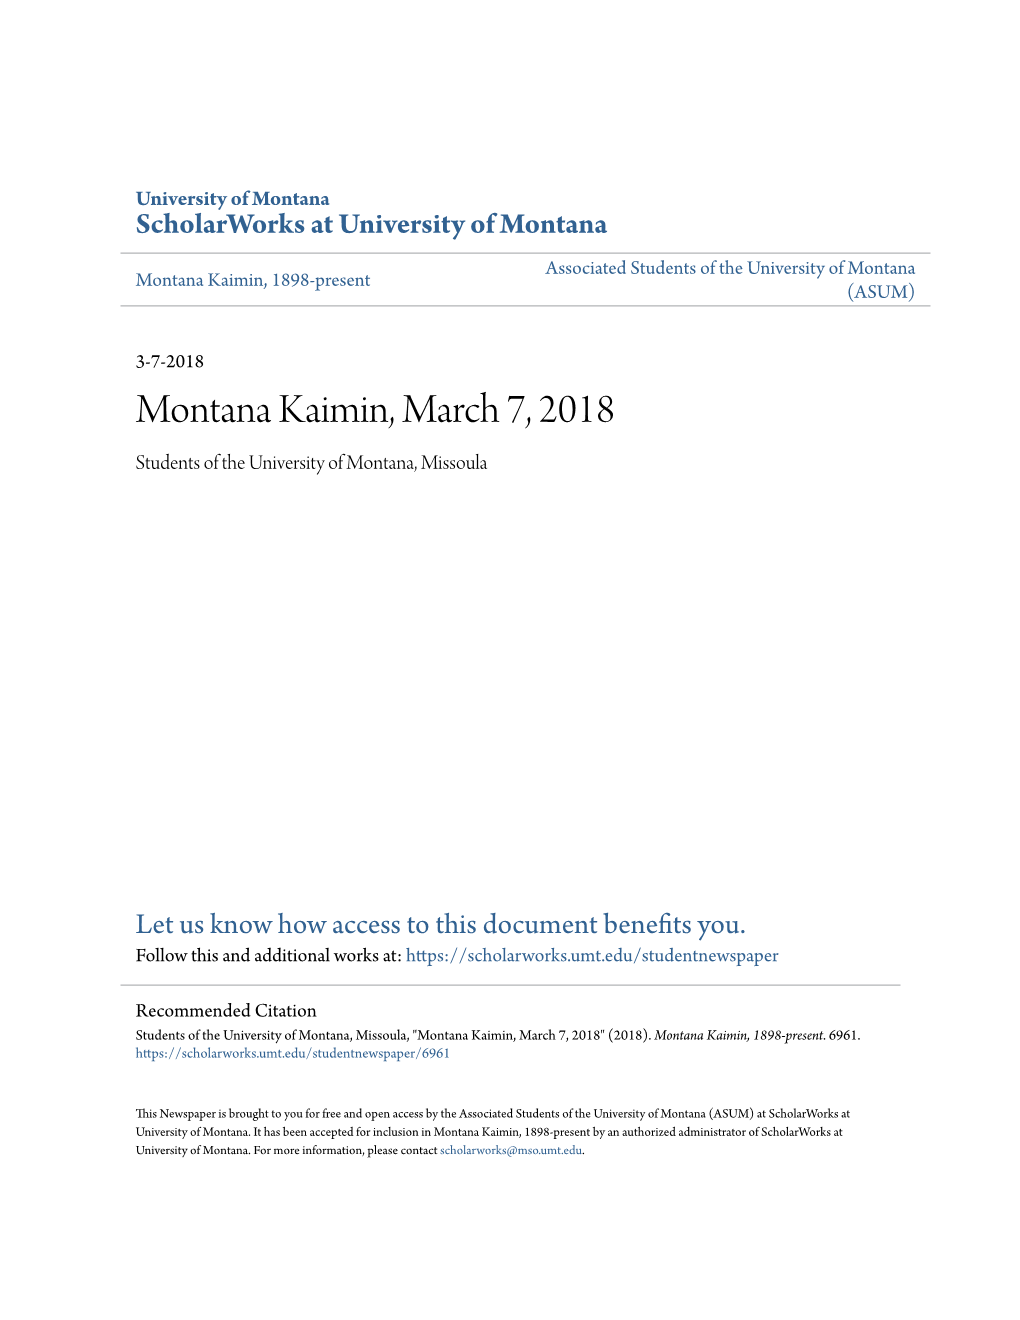 Montana Kaimin, March 7, 2018 Students of the University of Montana, Missoula